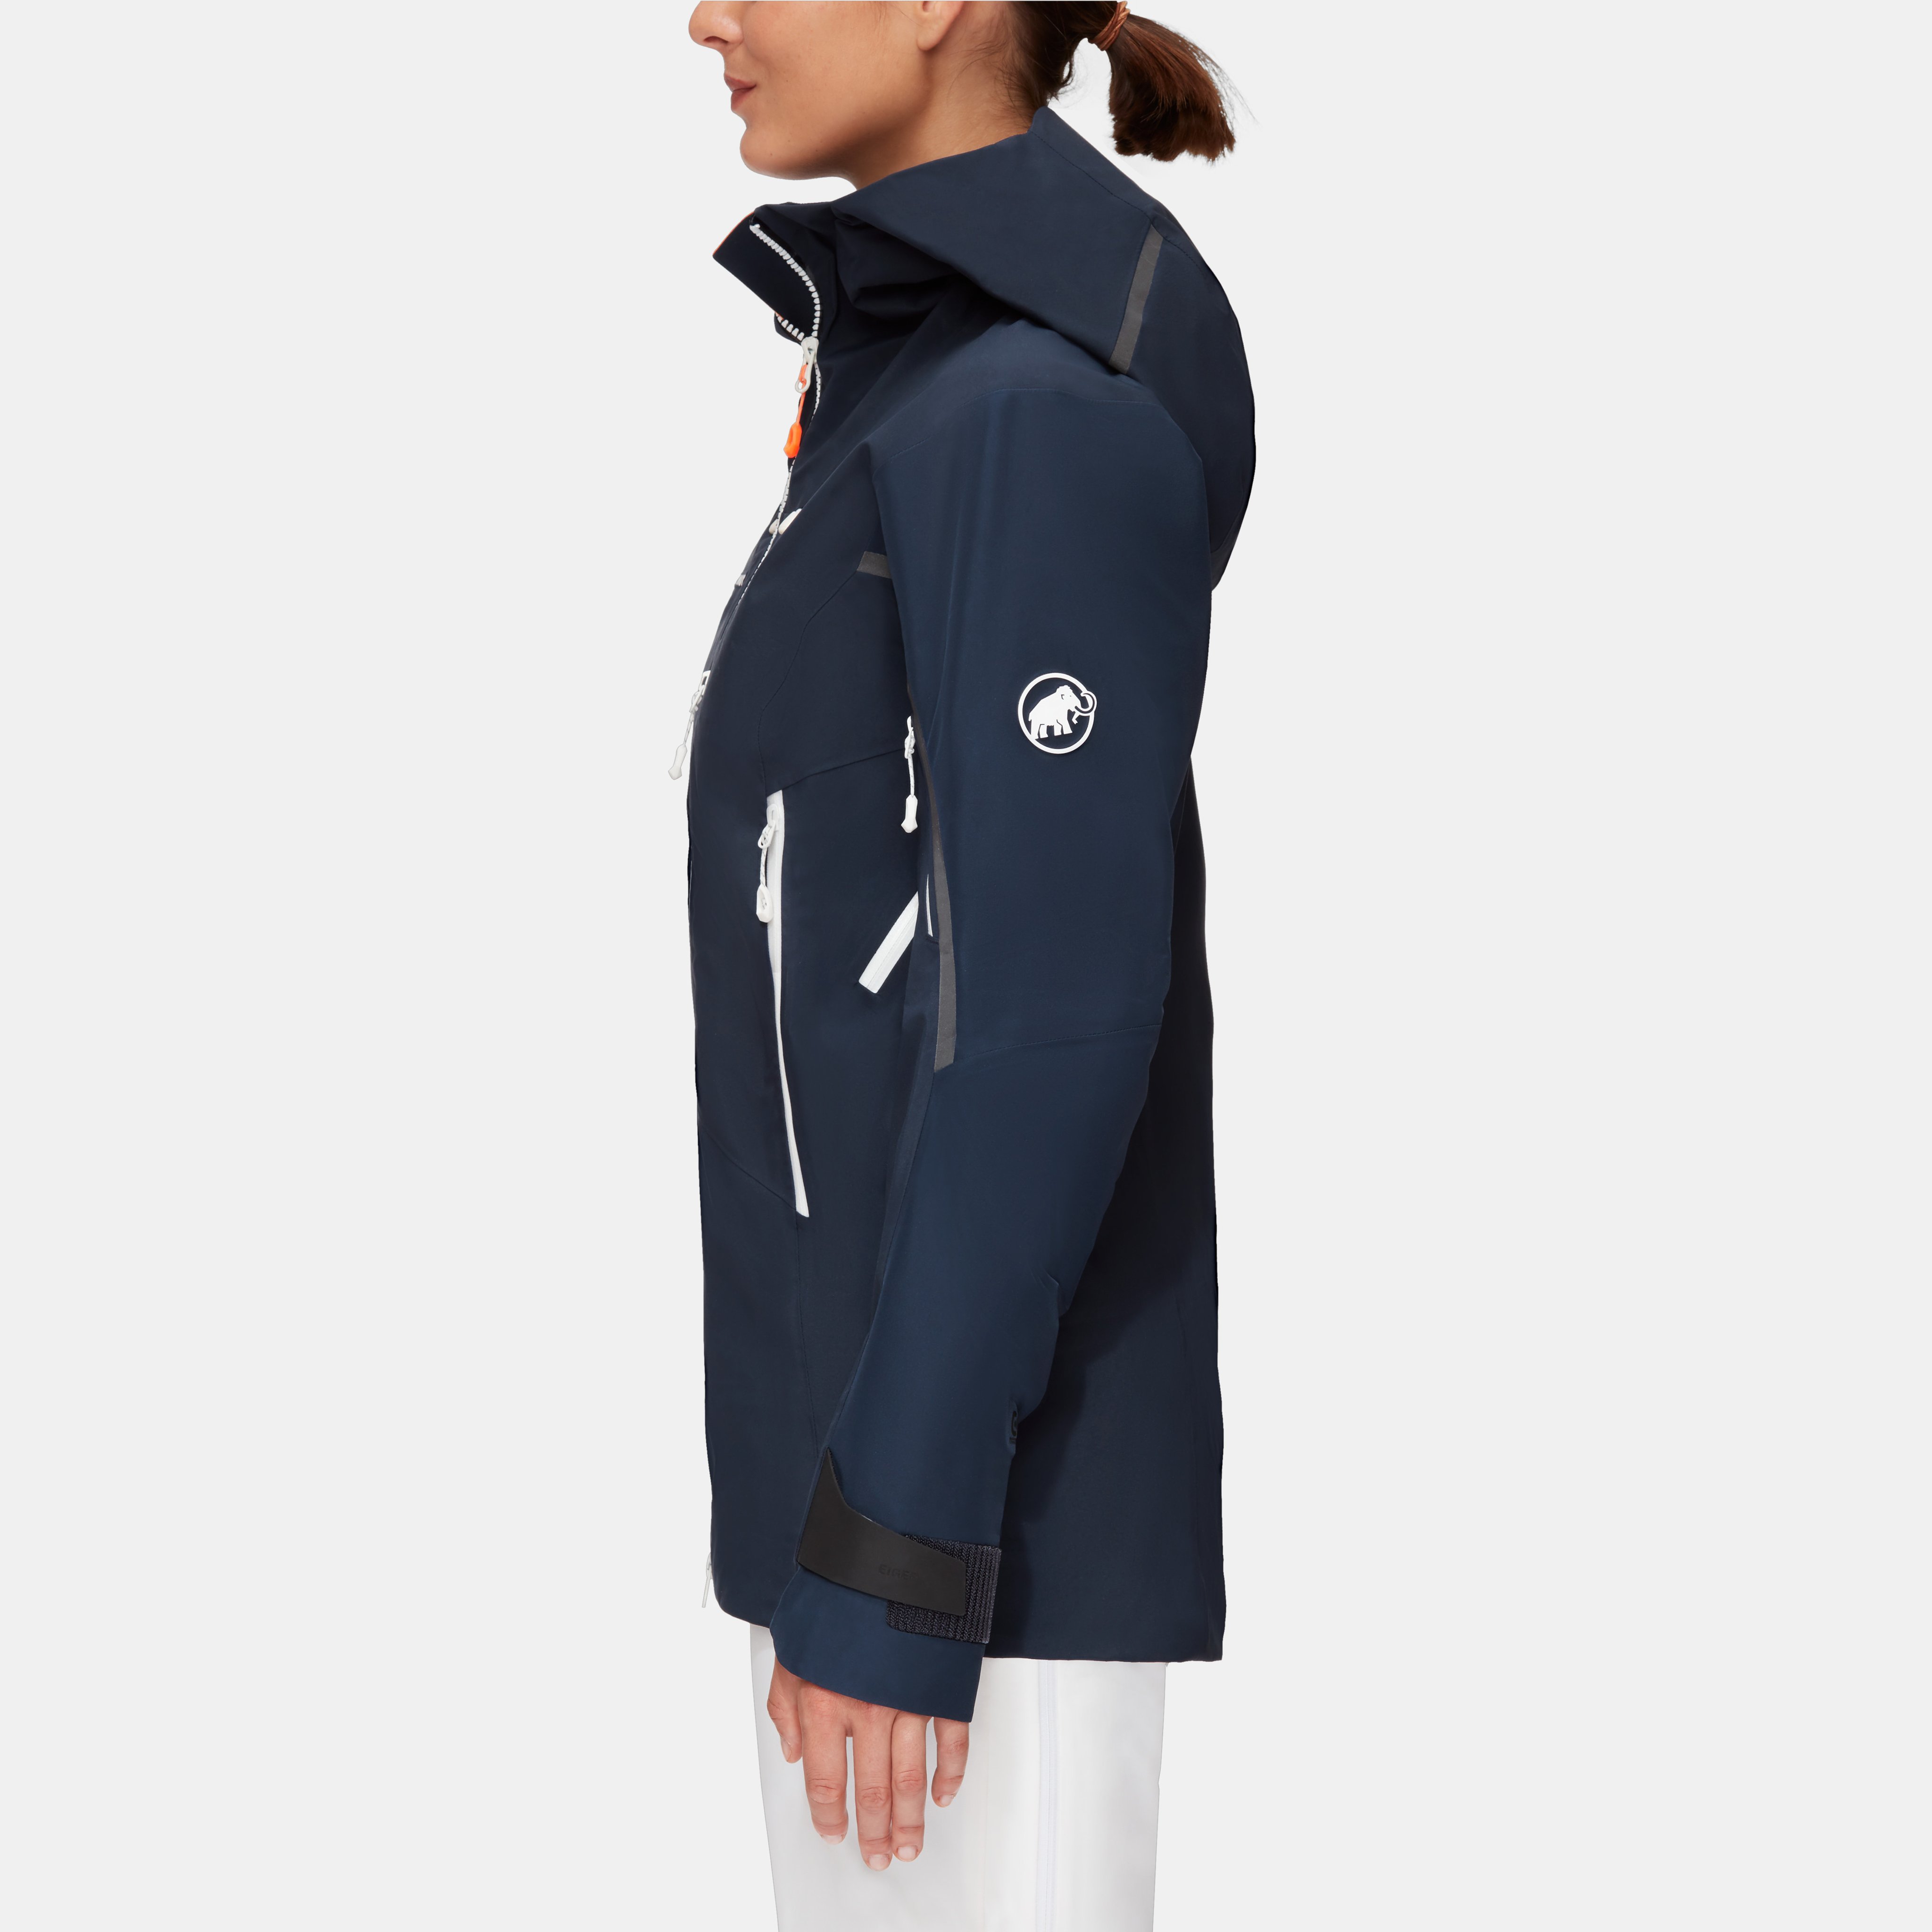 Nordwand Pro HS Hooded Jacket Women product image